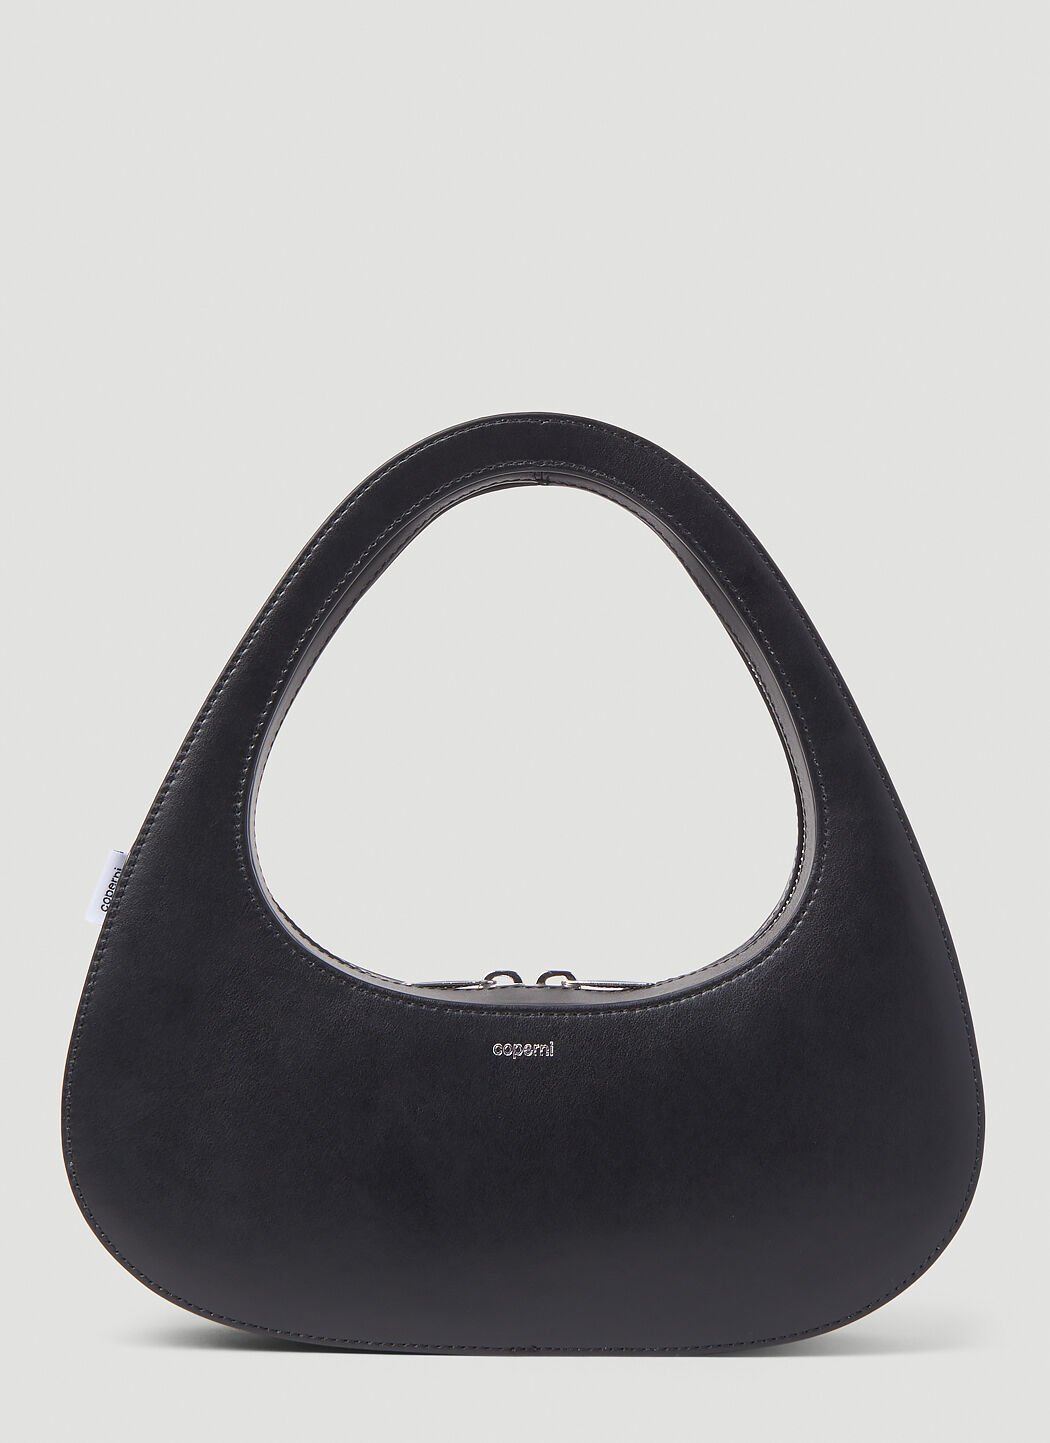 Coperni Baguette Swipe Handbag Black cpn0251010